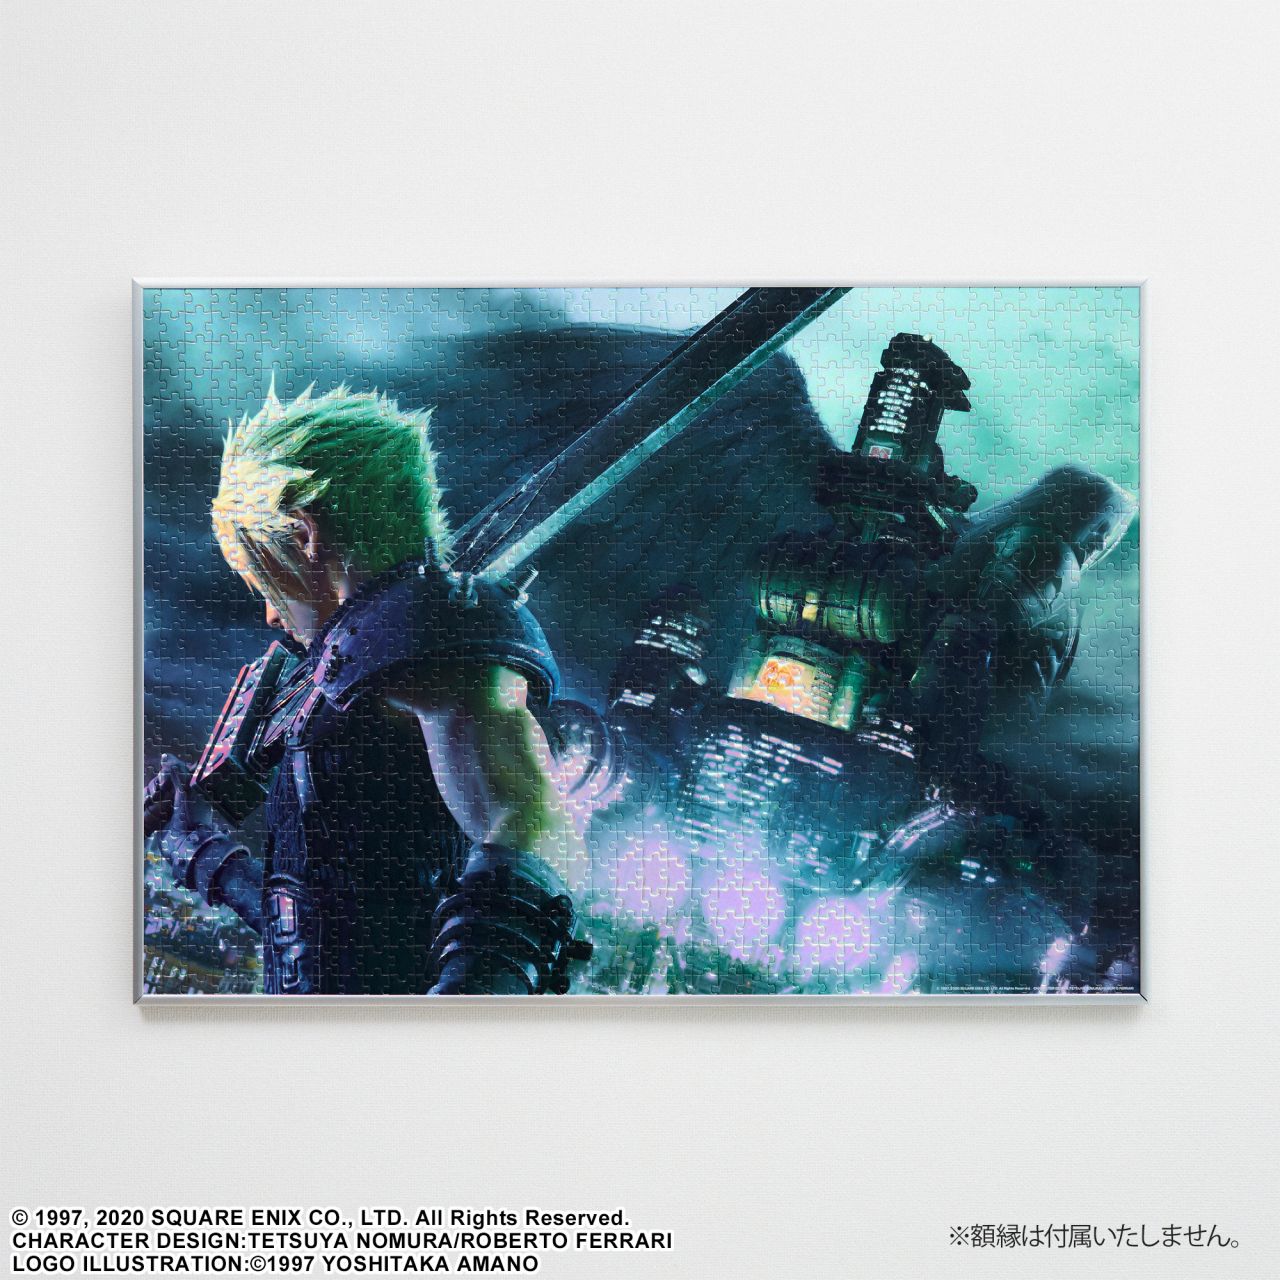 Square Enix Final Fantasy VII Remake Premium Jigsaw Puzzle Key Art - 1000 Piece - Cloud ＆ Sephiroth